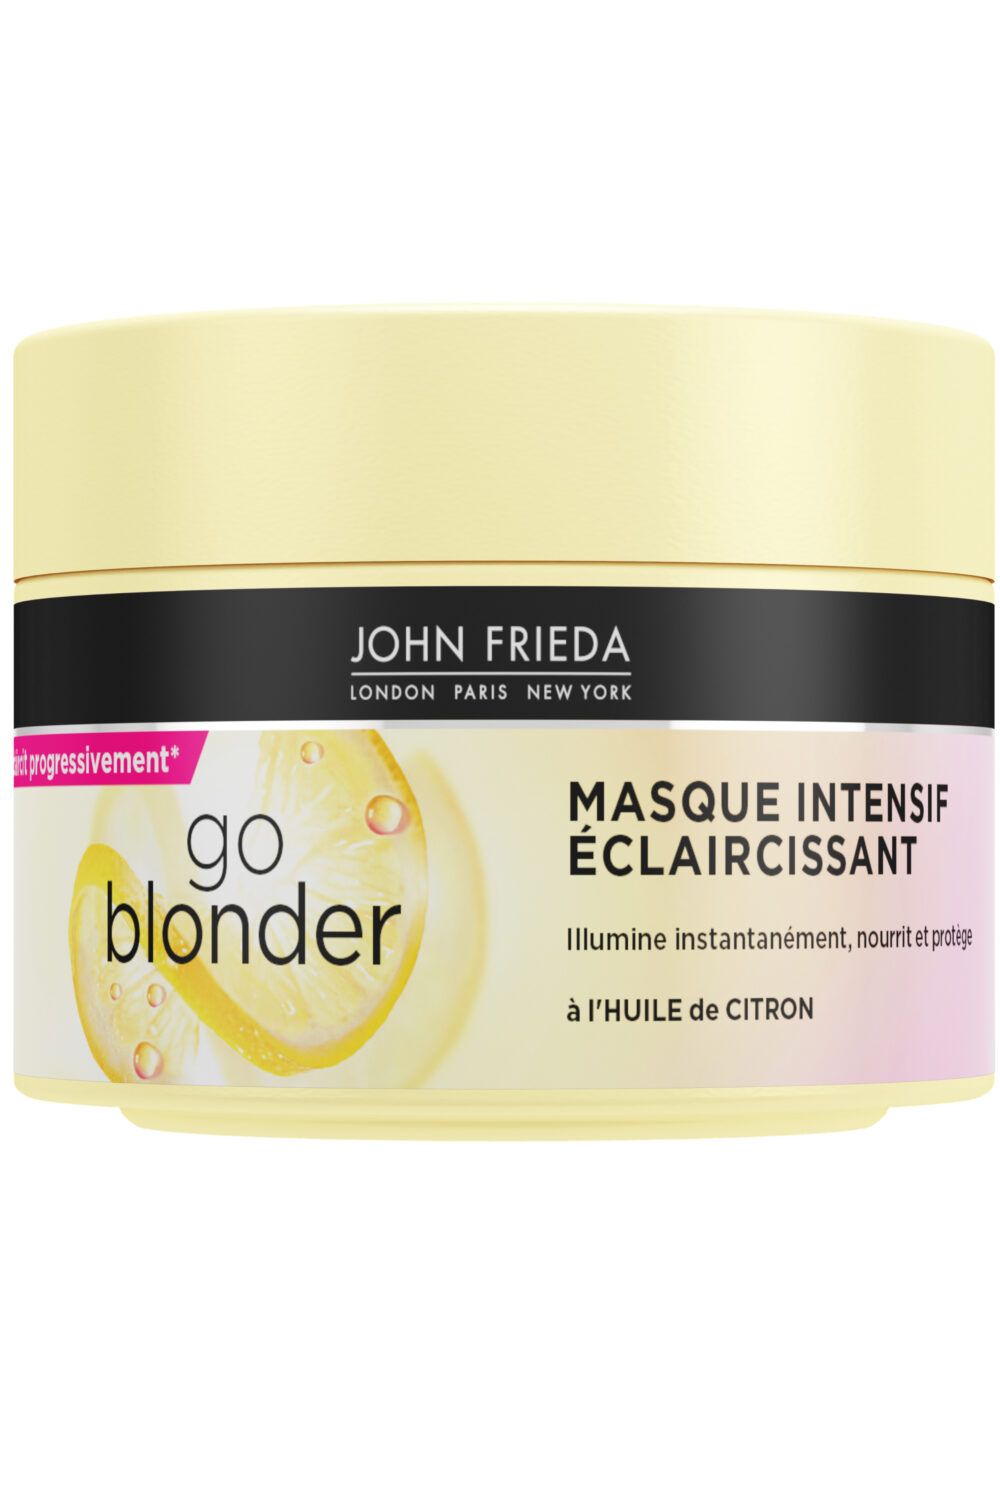 John Frieda - Masque intensif éclaircissant Go Blonder